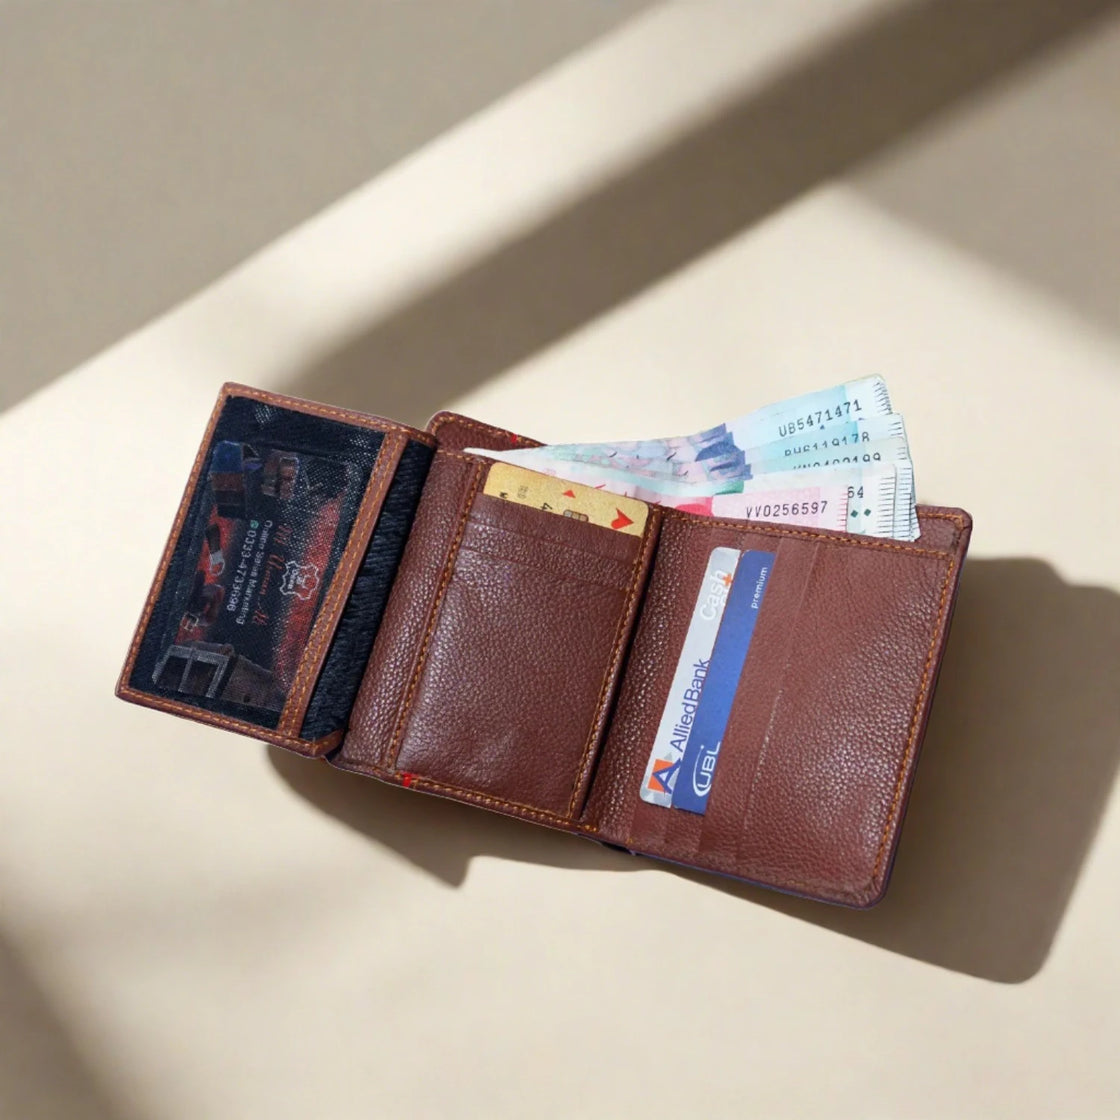 Verax Brown Leather Wallet